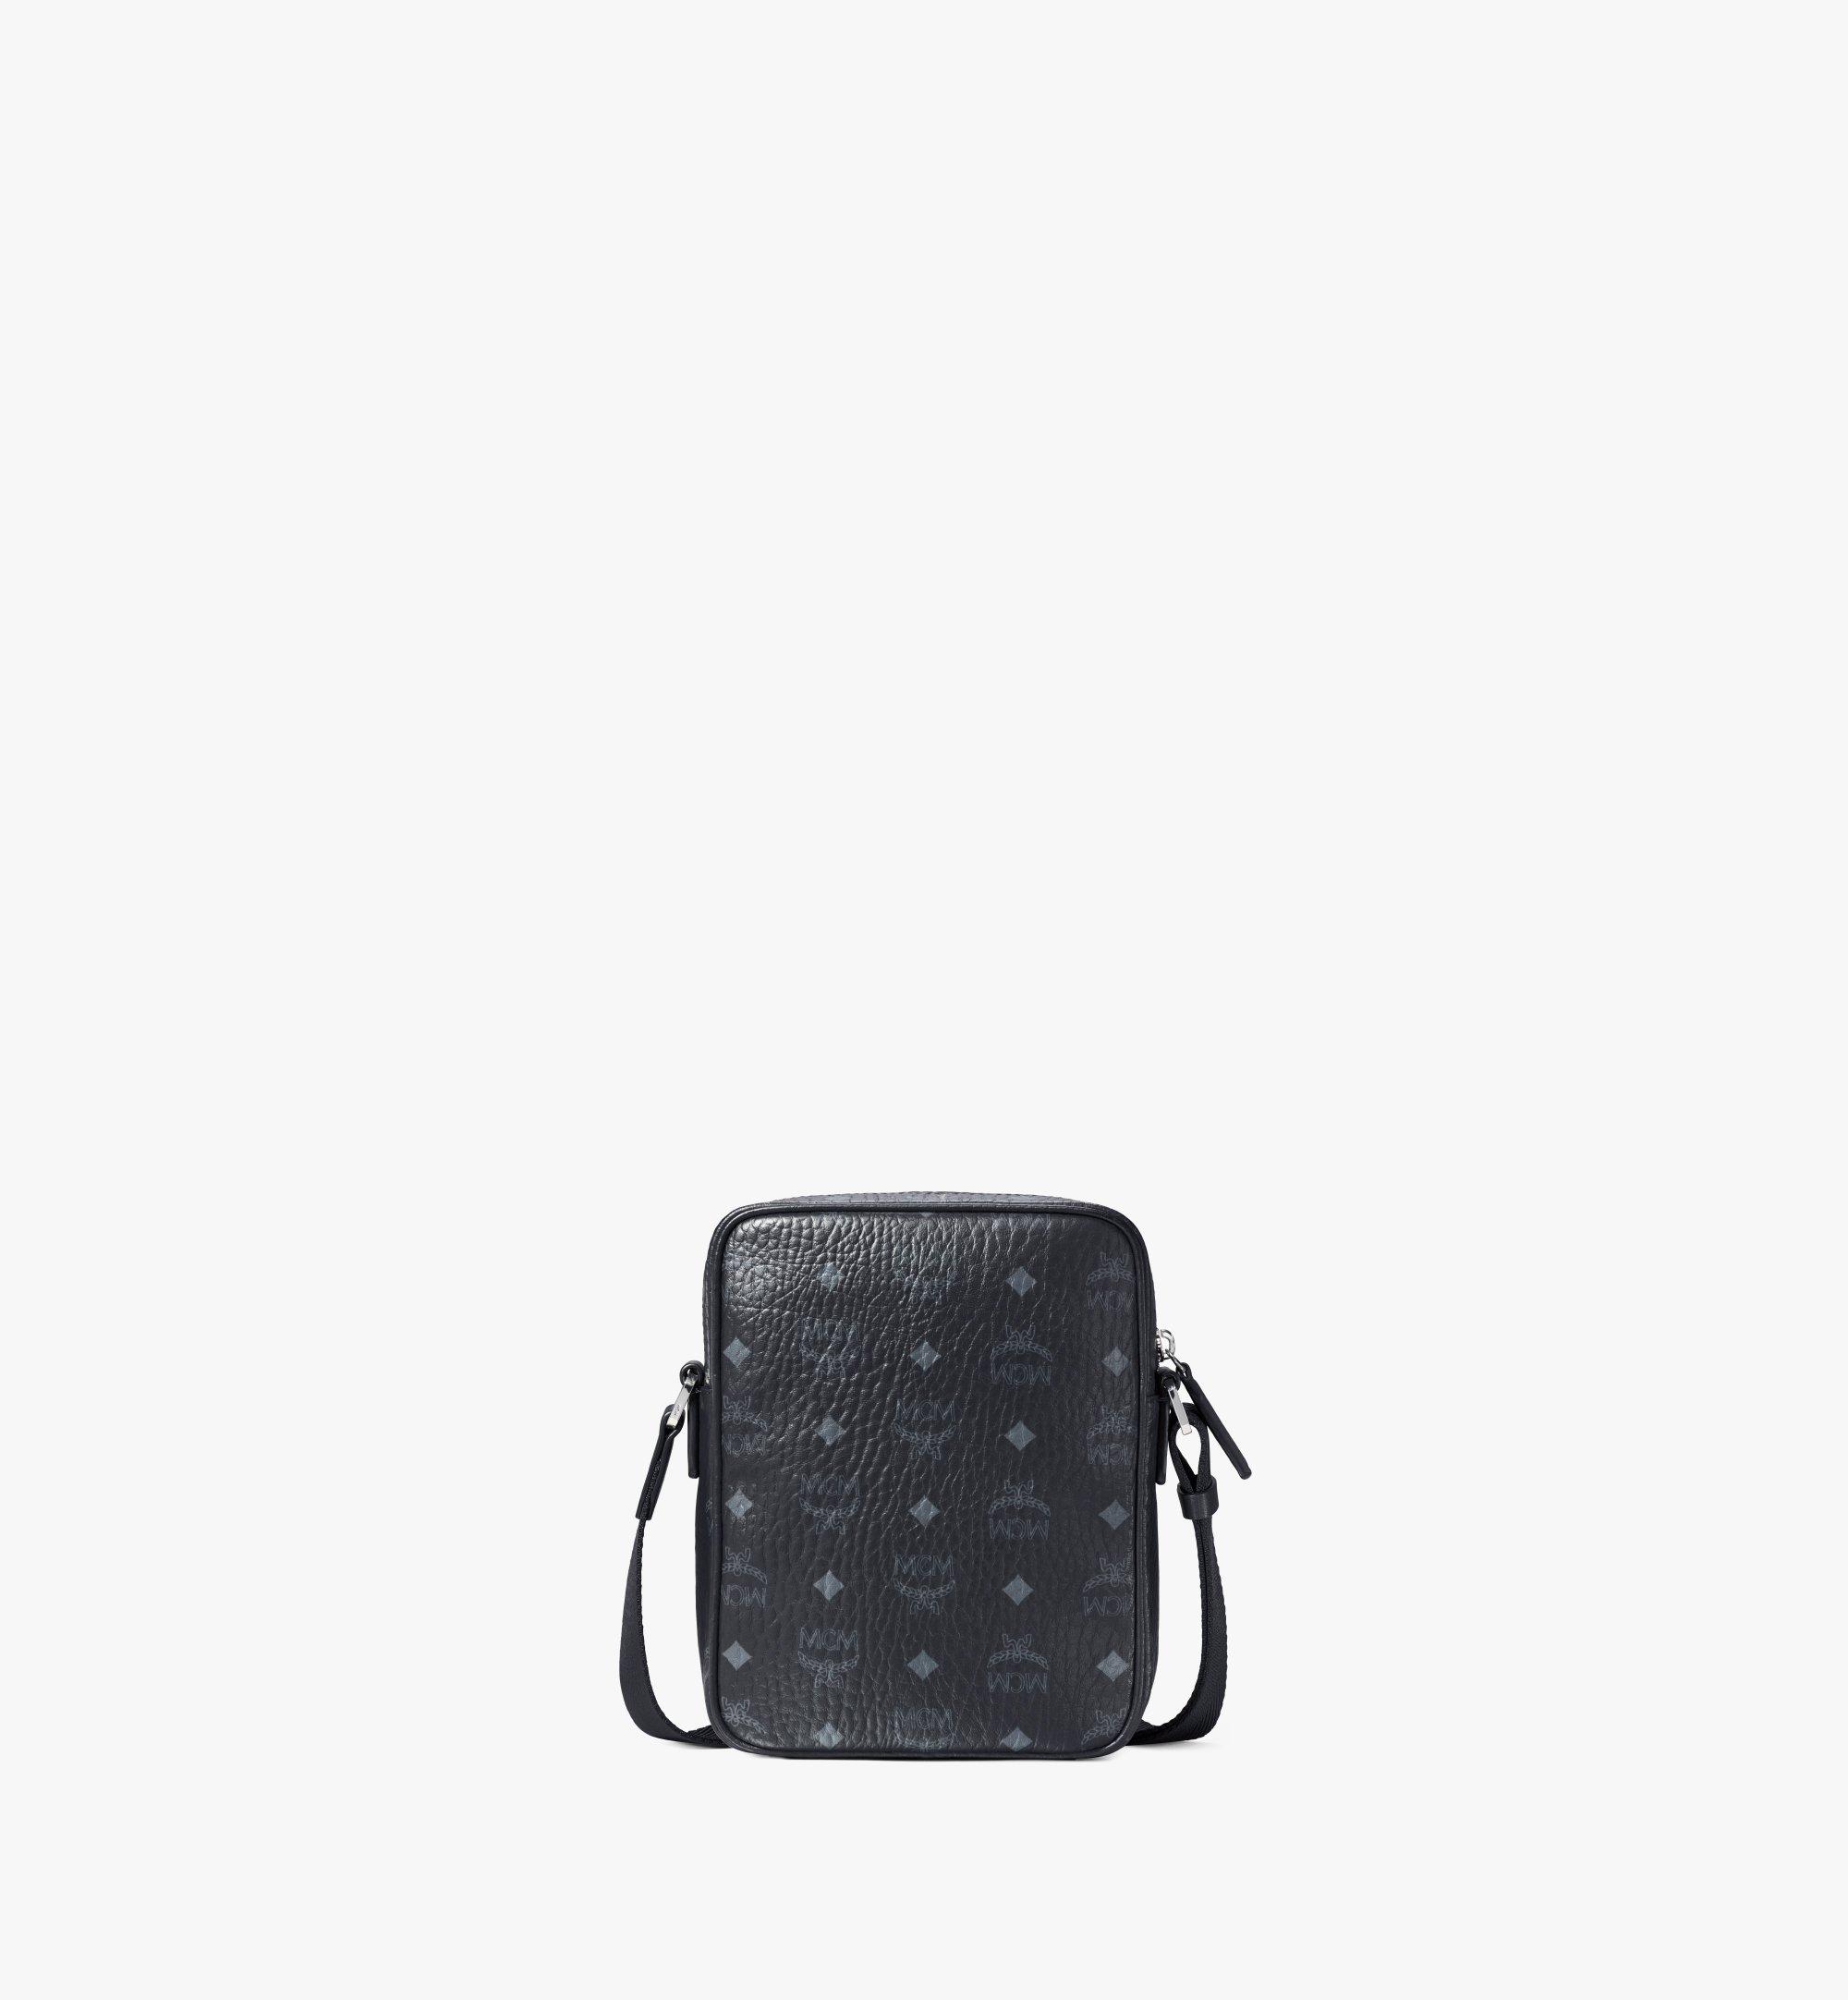 S black crossbody bag